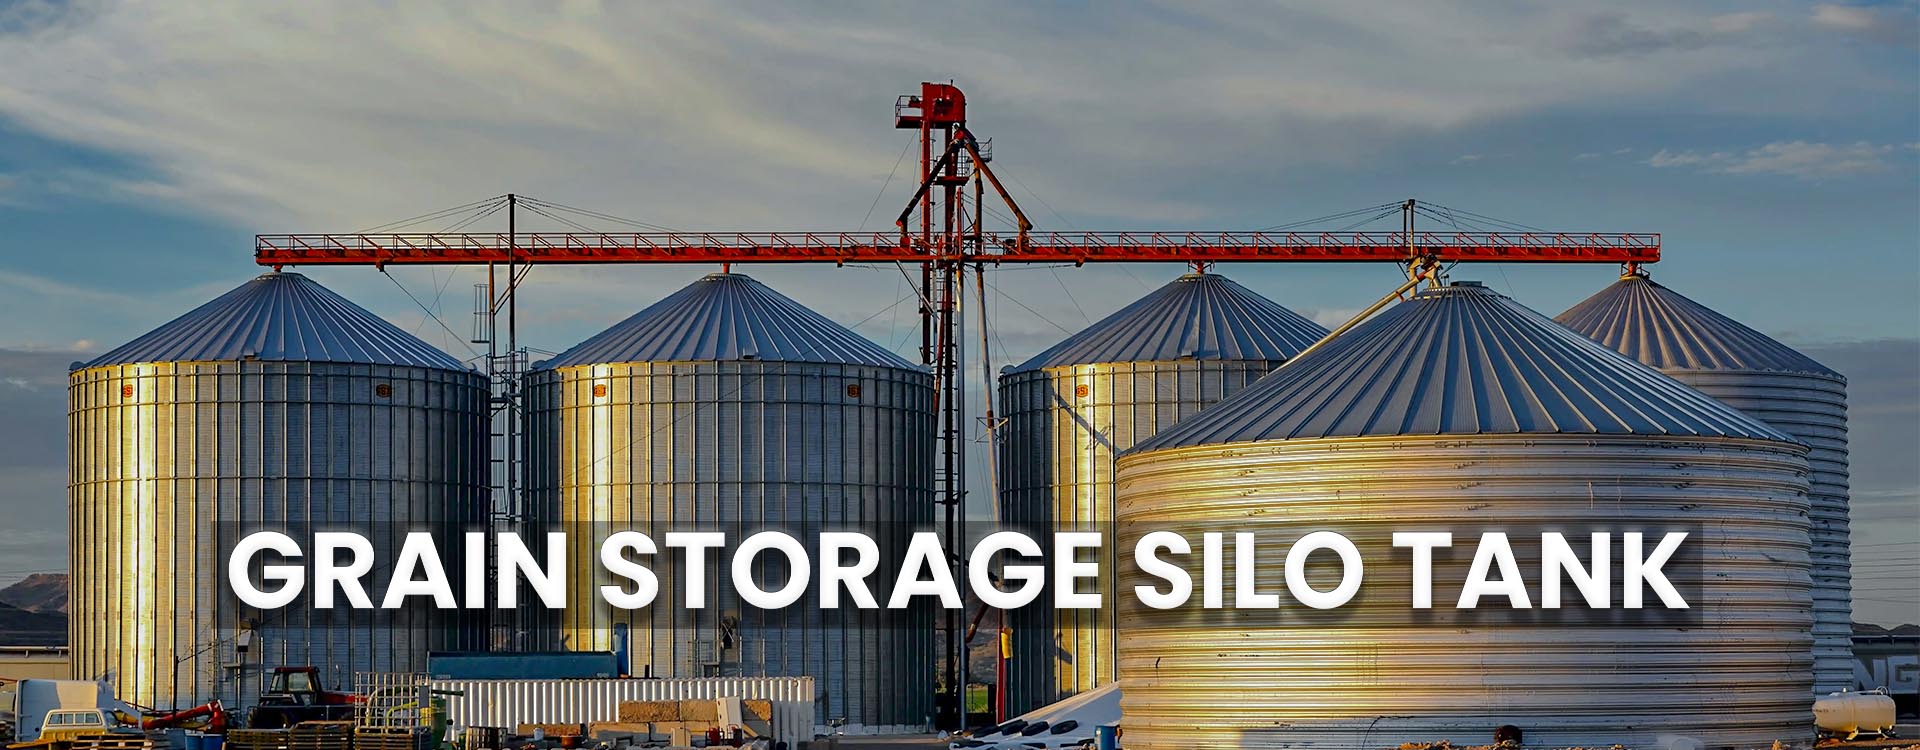 Grain Storage Silo Tank